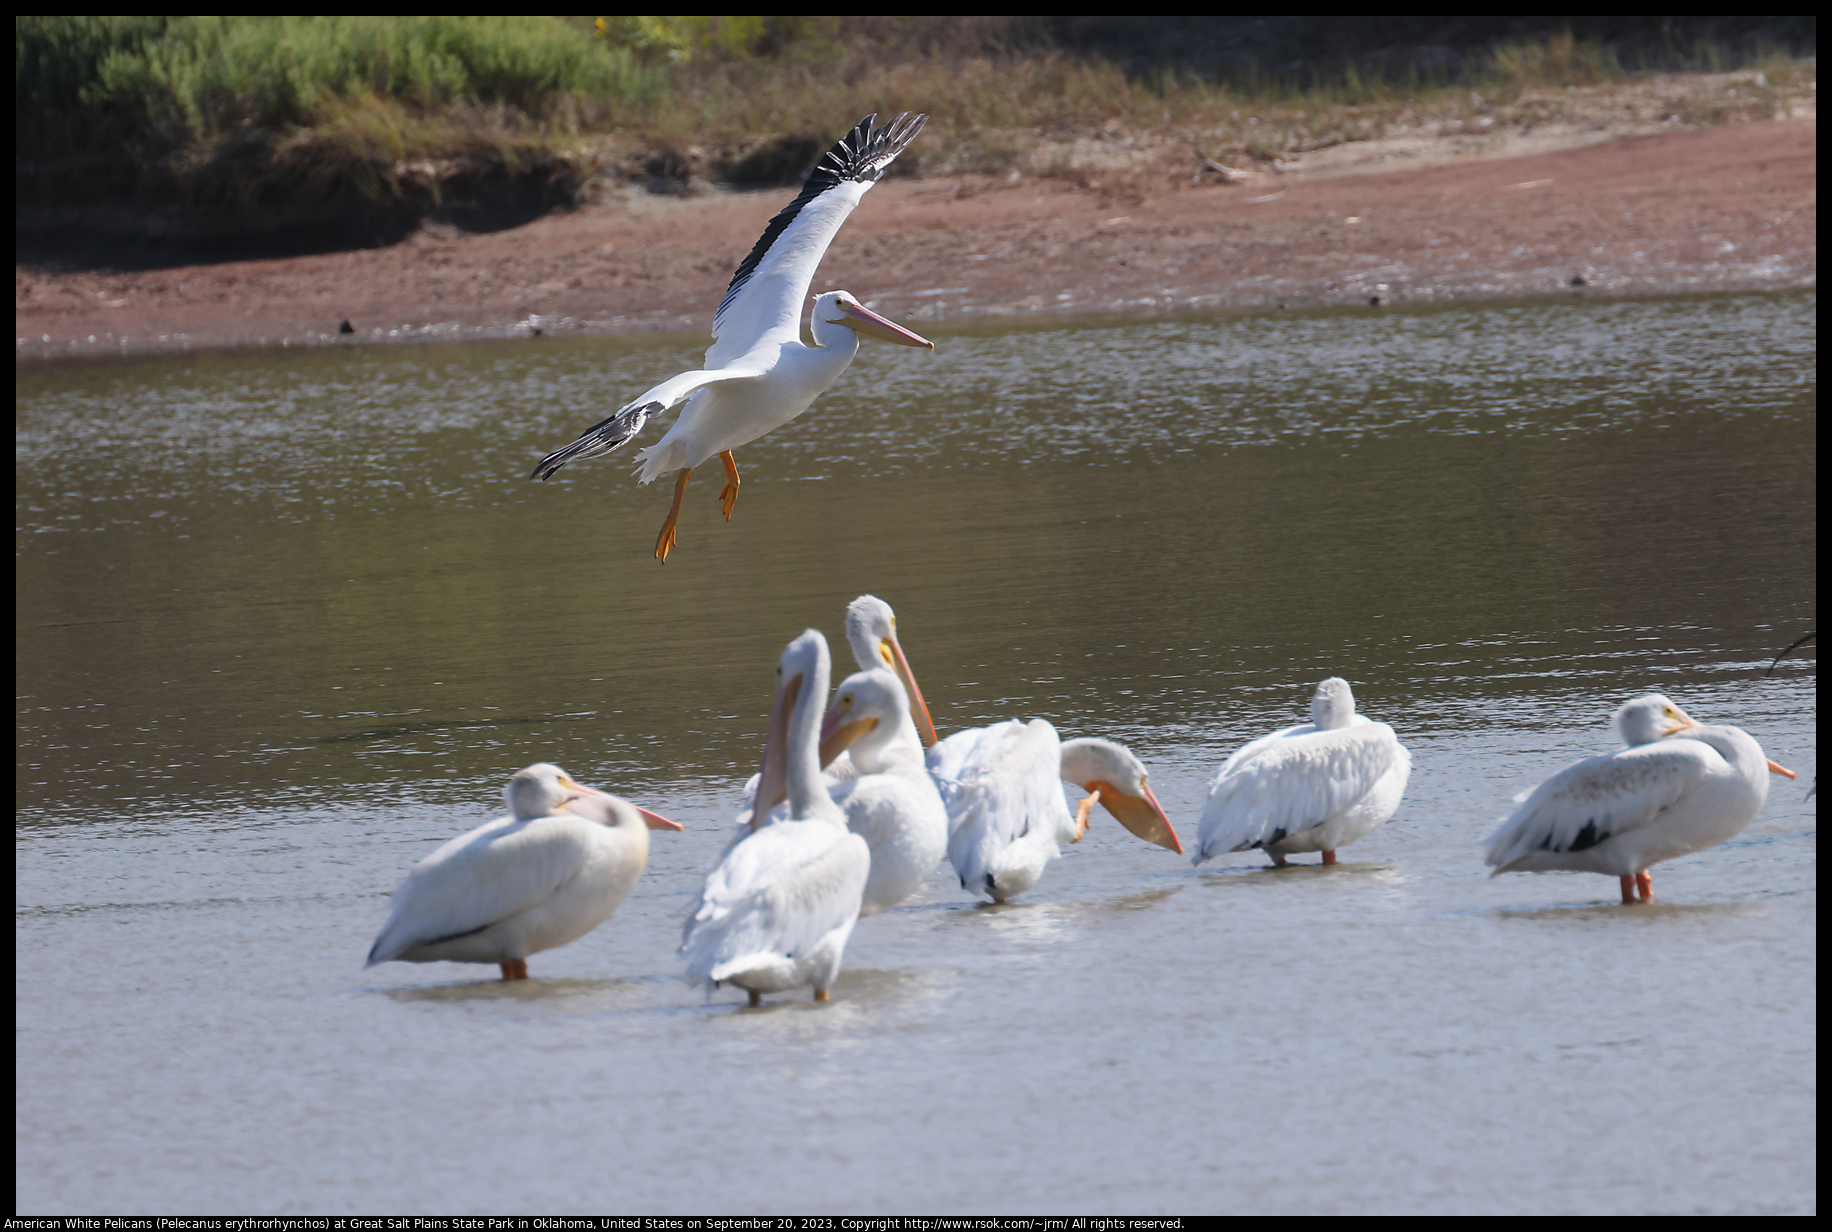 American White Pelicans (Pelecanus erythrorhynchos) at Great Salt Plains State Park in Oklahoma, United States on September 20, 2023